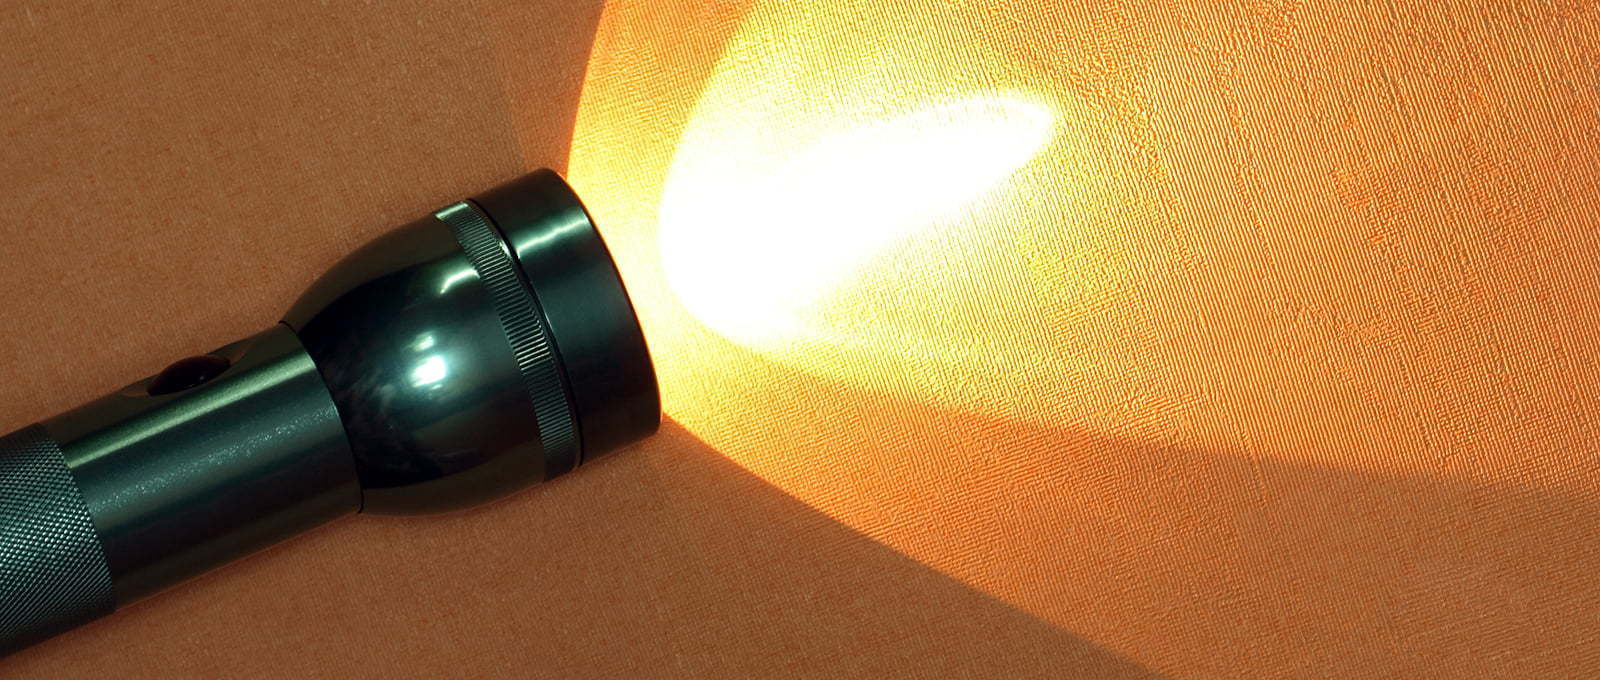 Modern aluminium luminous flashlight on ginger background with copy space